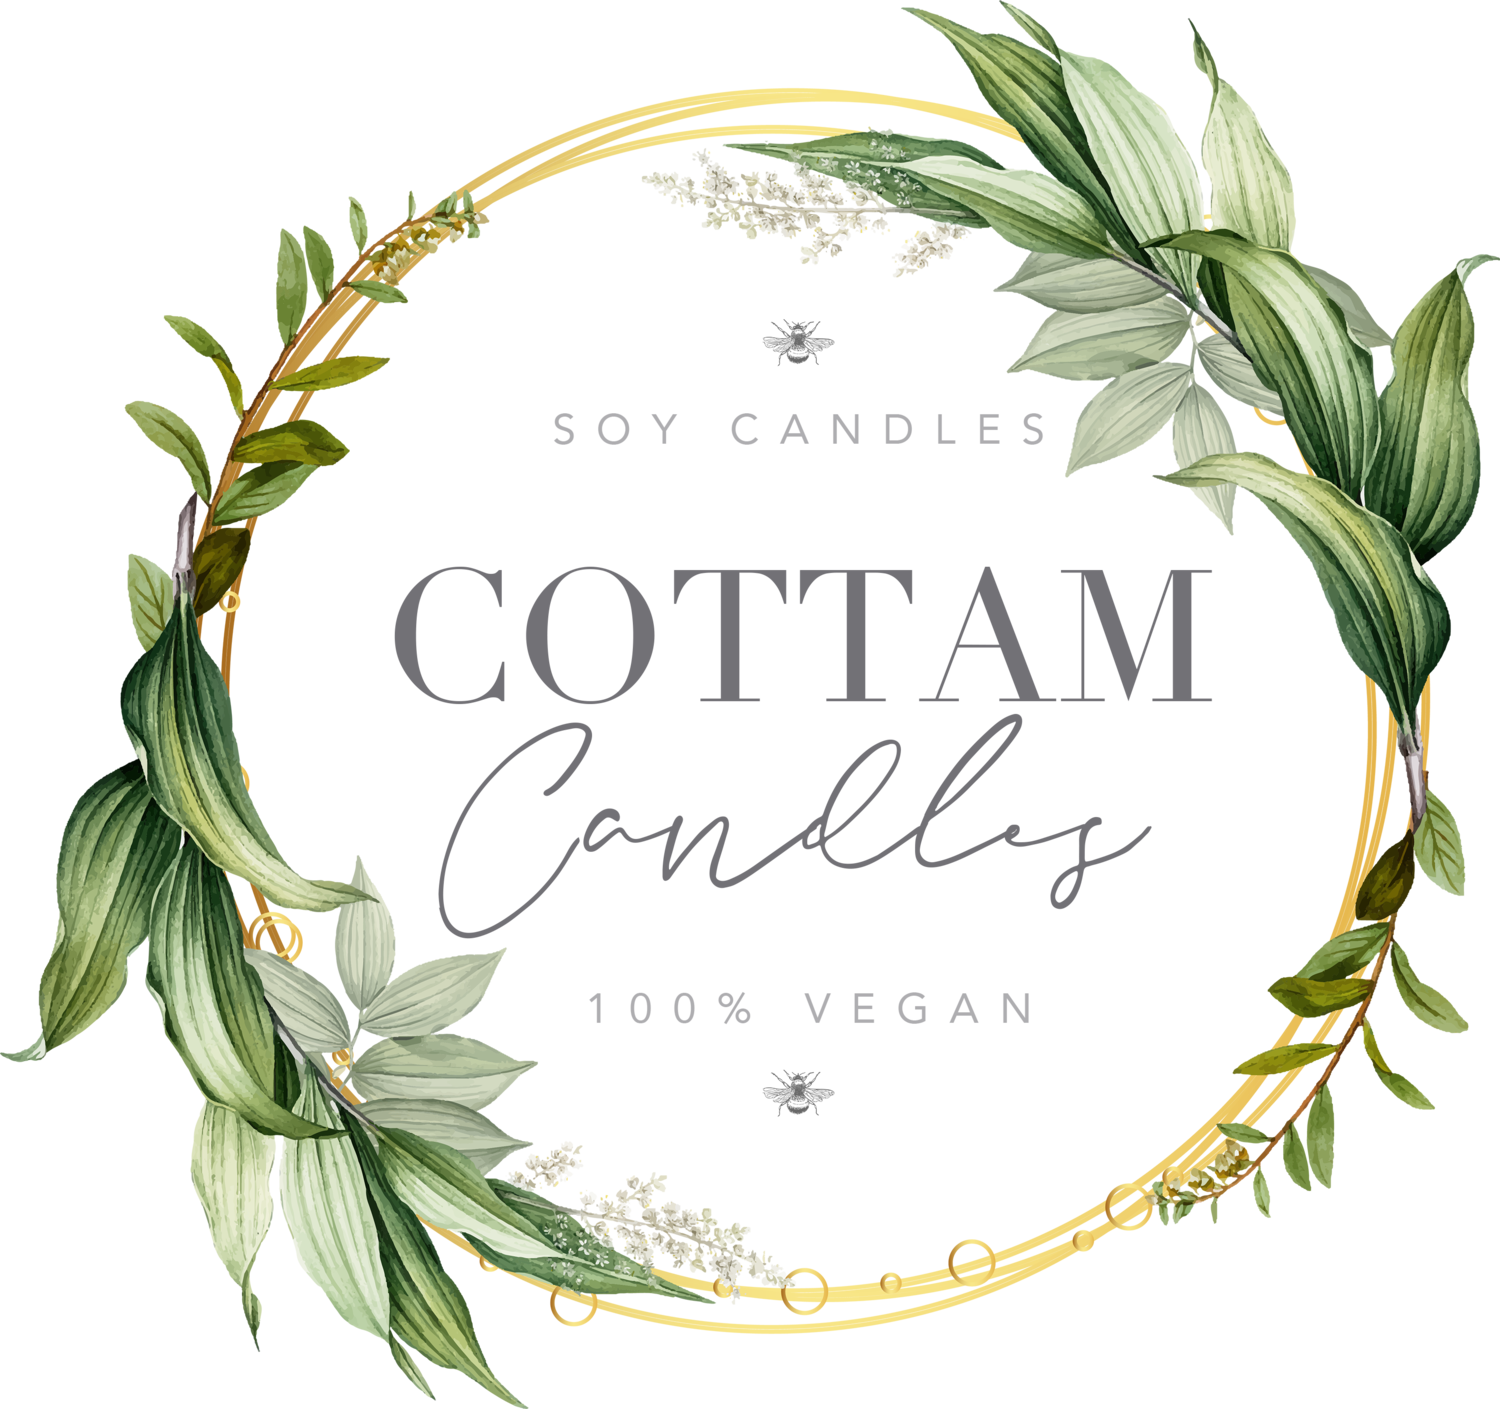 Cottam Candles